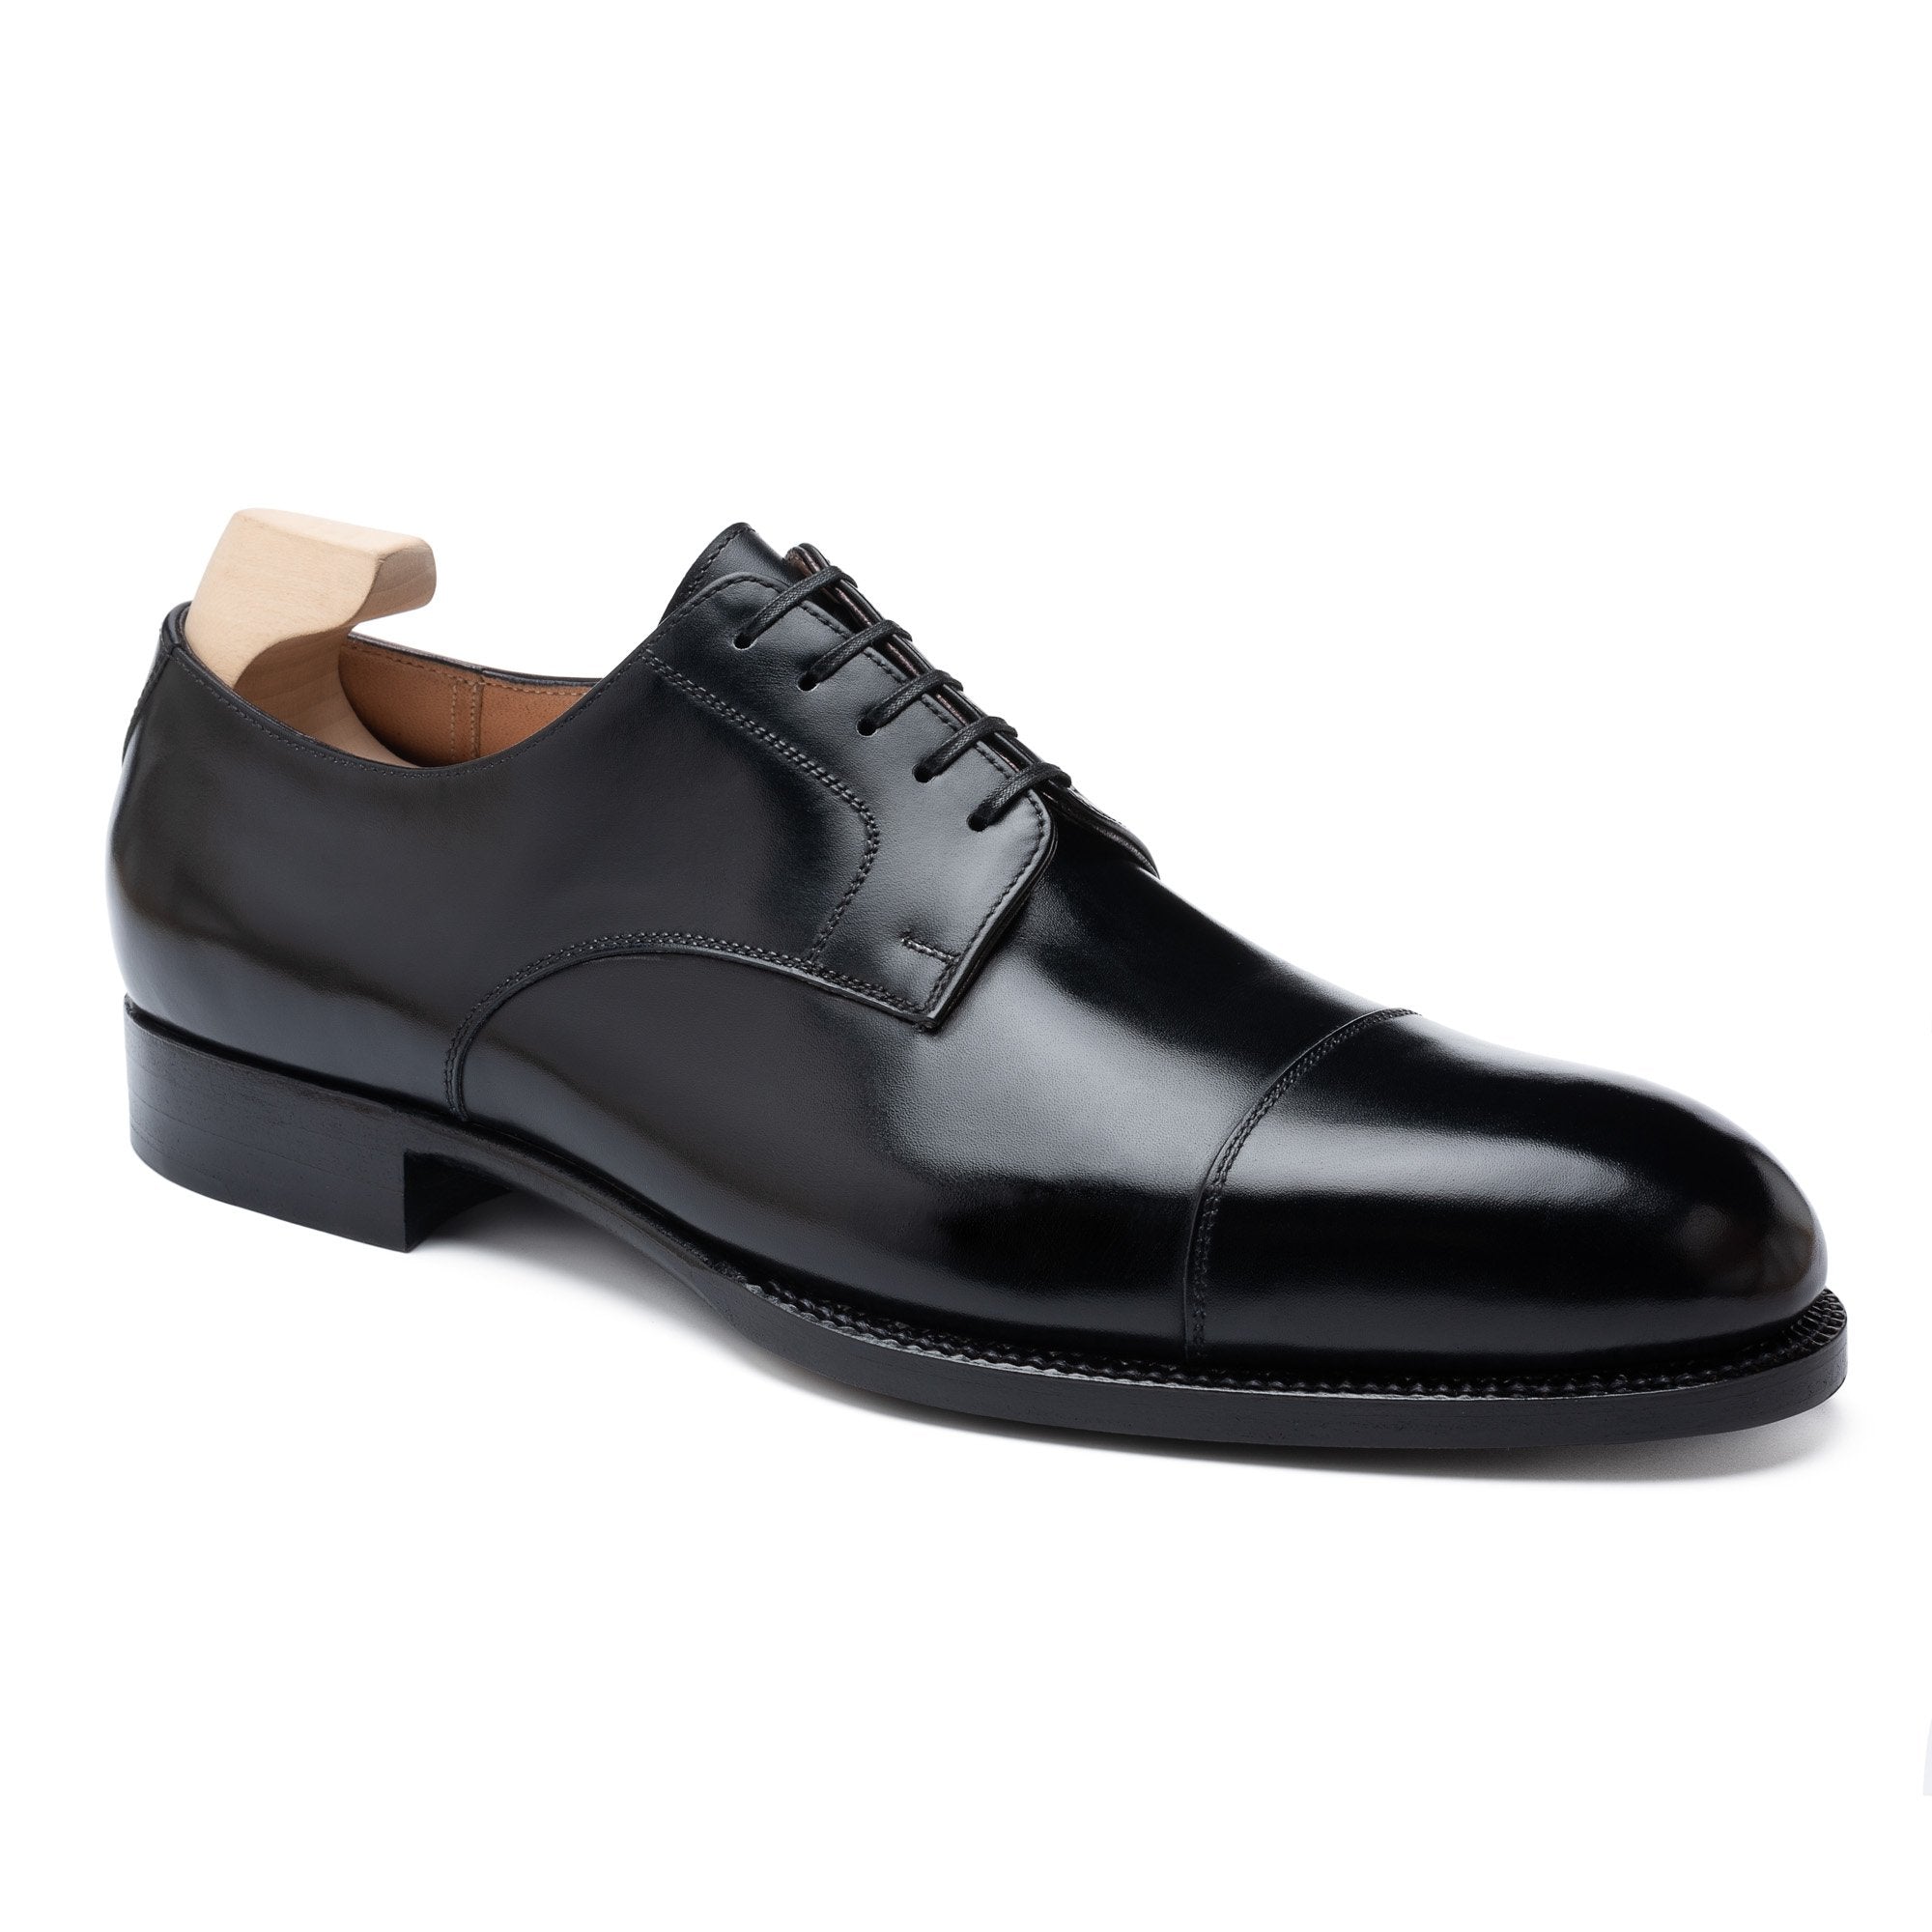 PASSUS SHOES "Dean" Handmade Black Box Calf Cap Toe Derby Shoes US 10.5 NEW EU 43.5 PASSUS SHOES